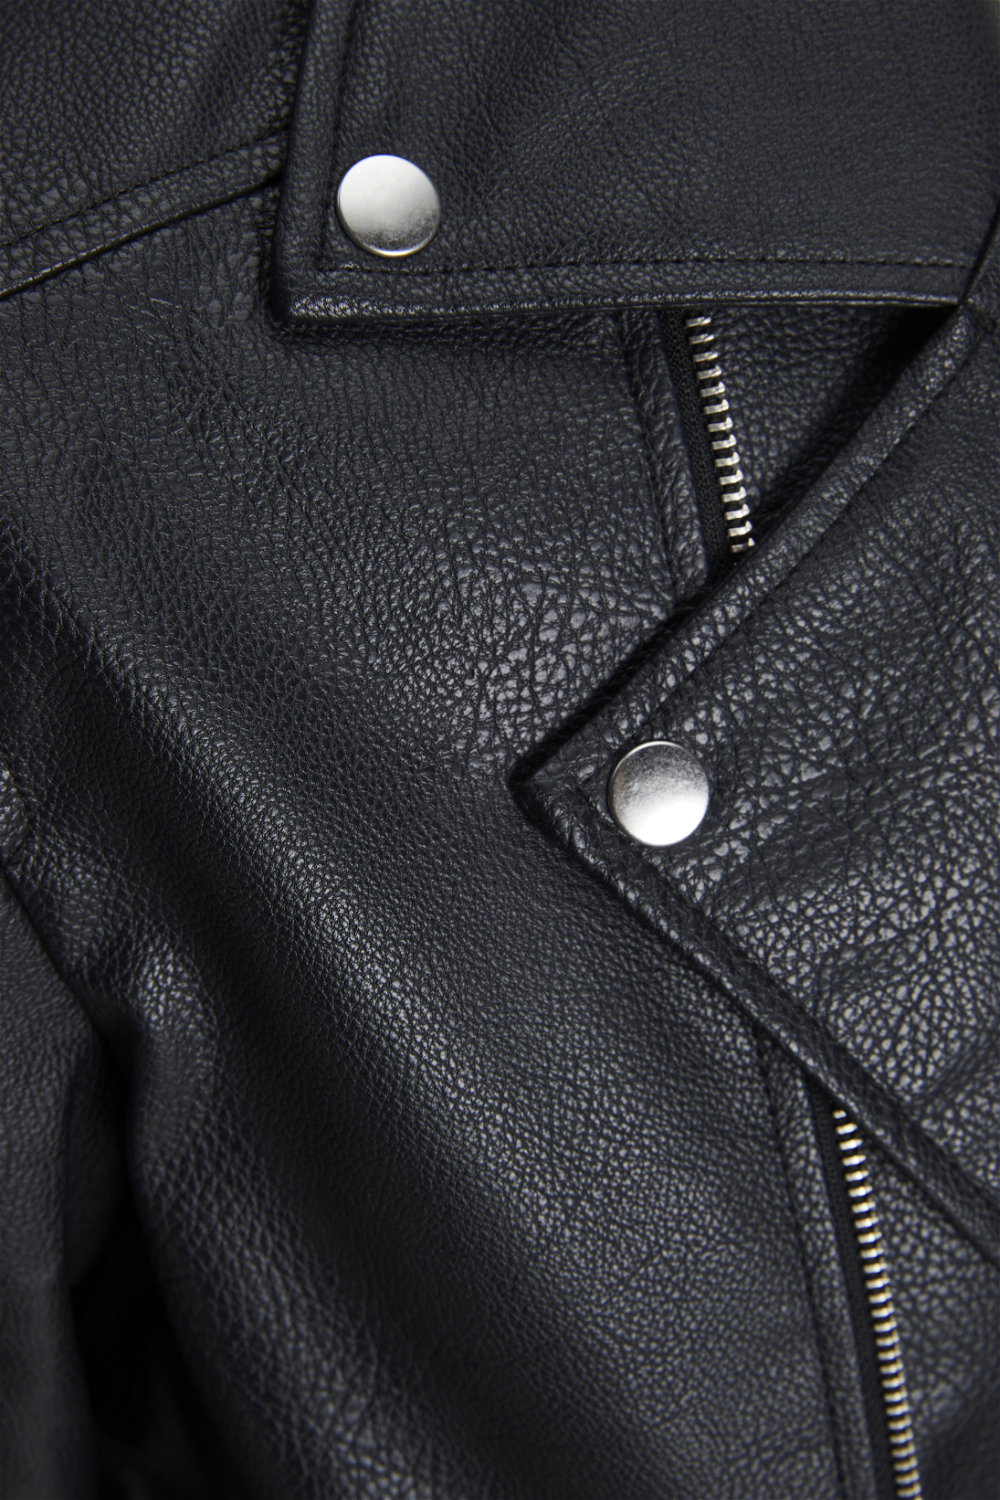 Jack & Jones Faux leather jacket -Black - 12236164